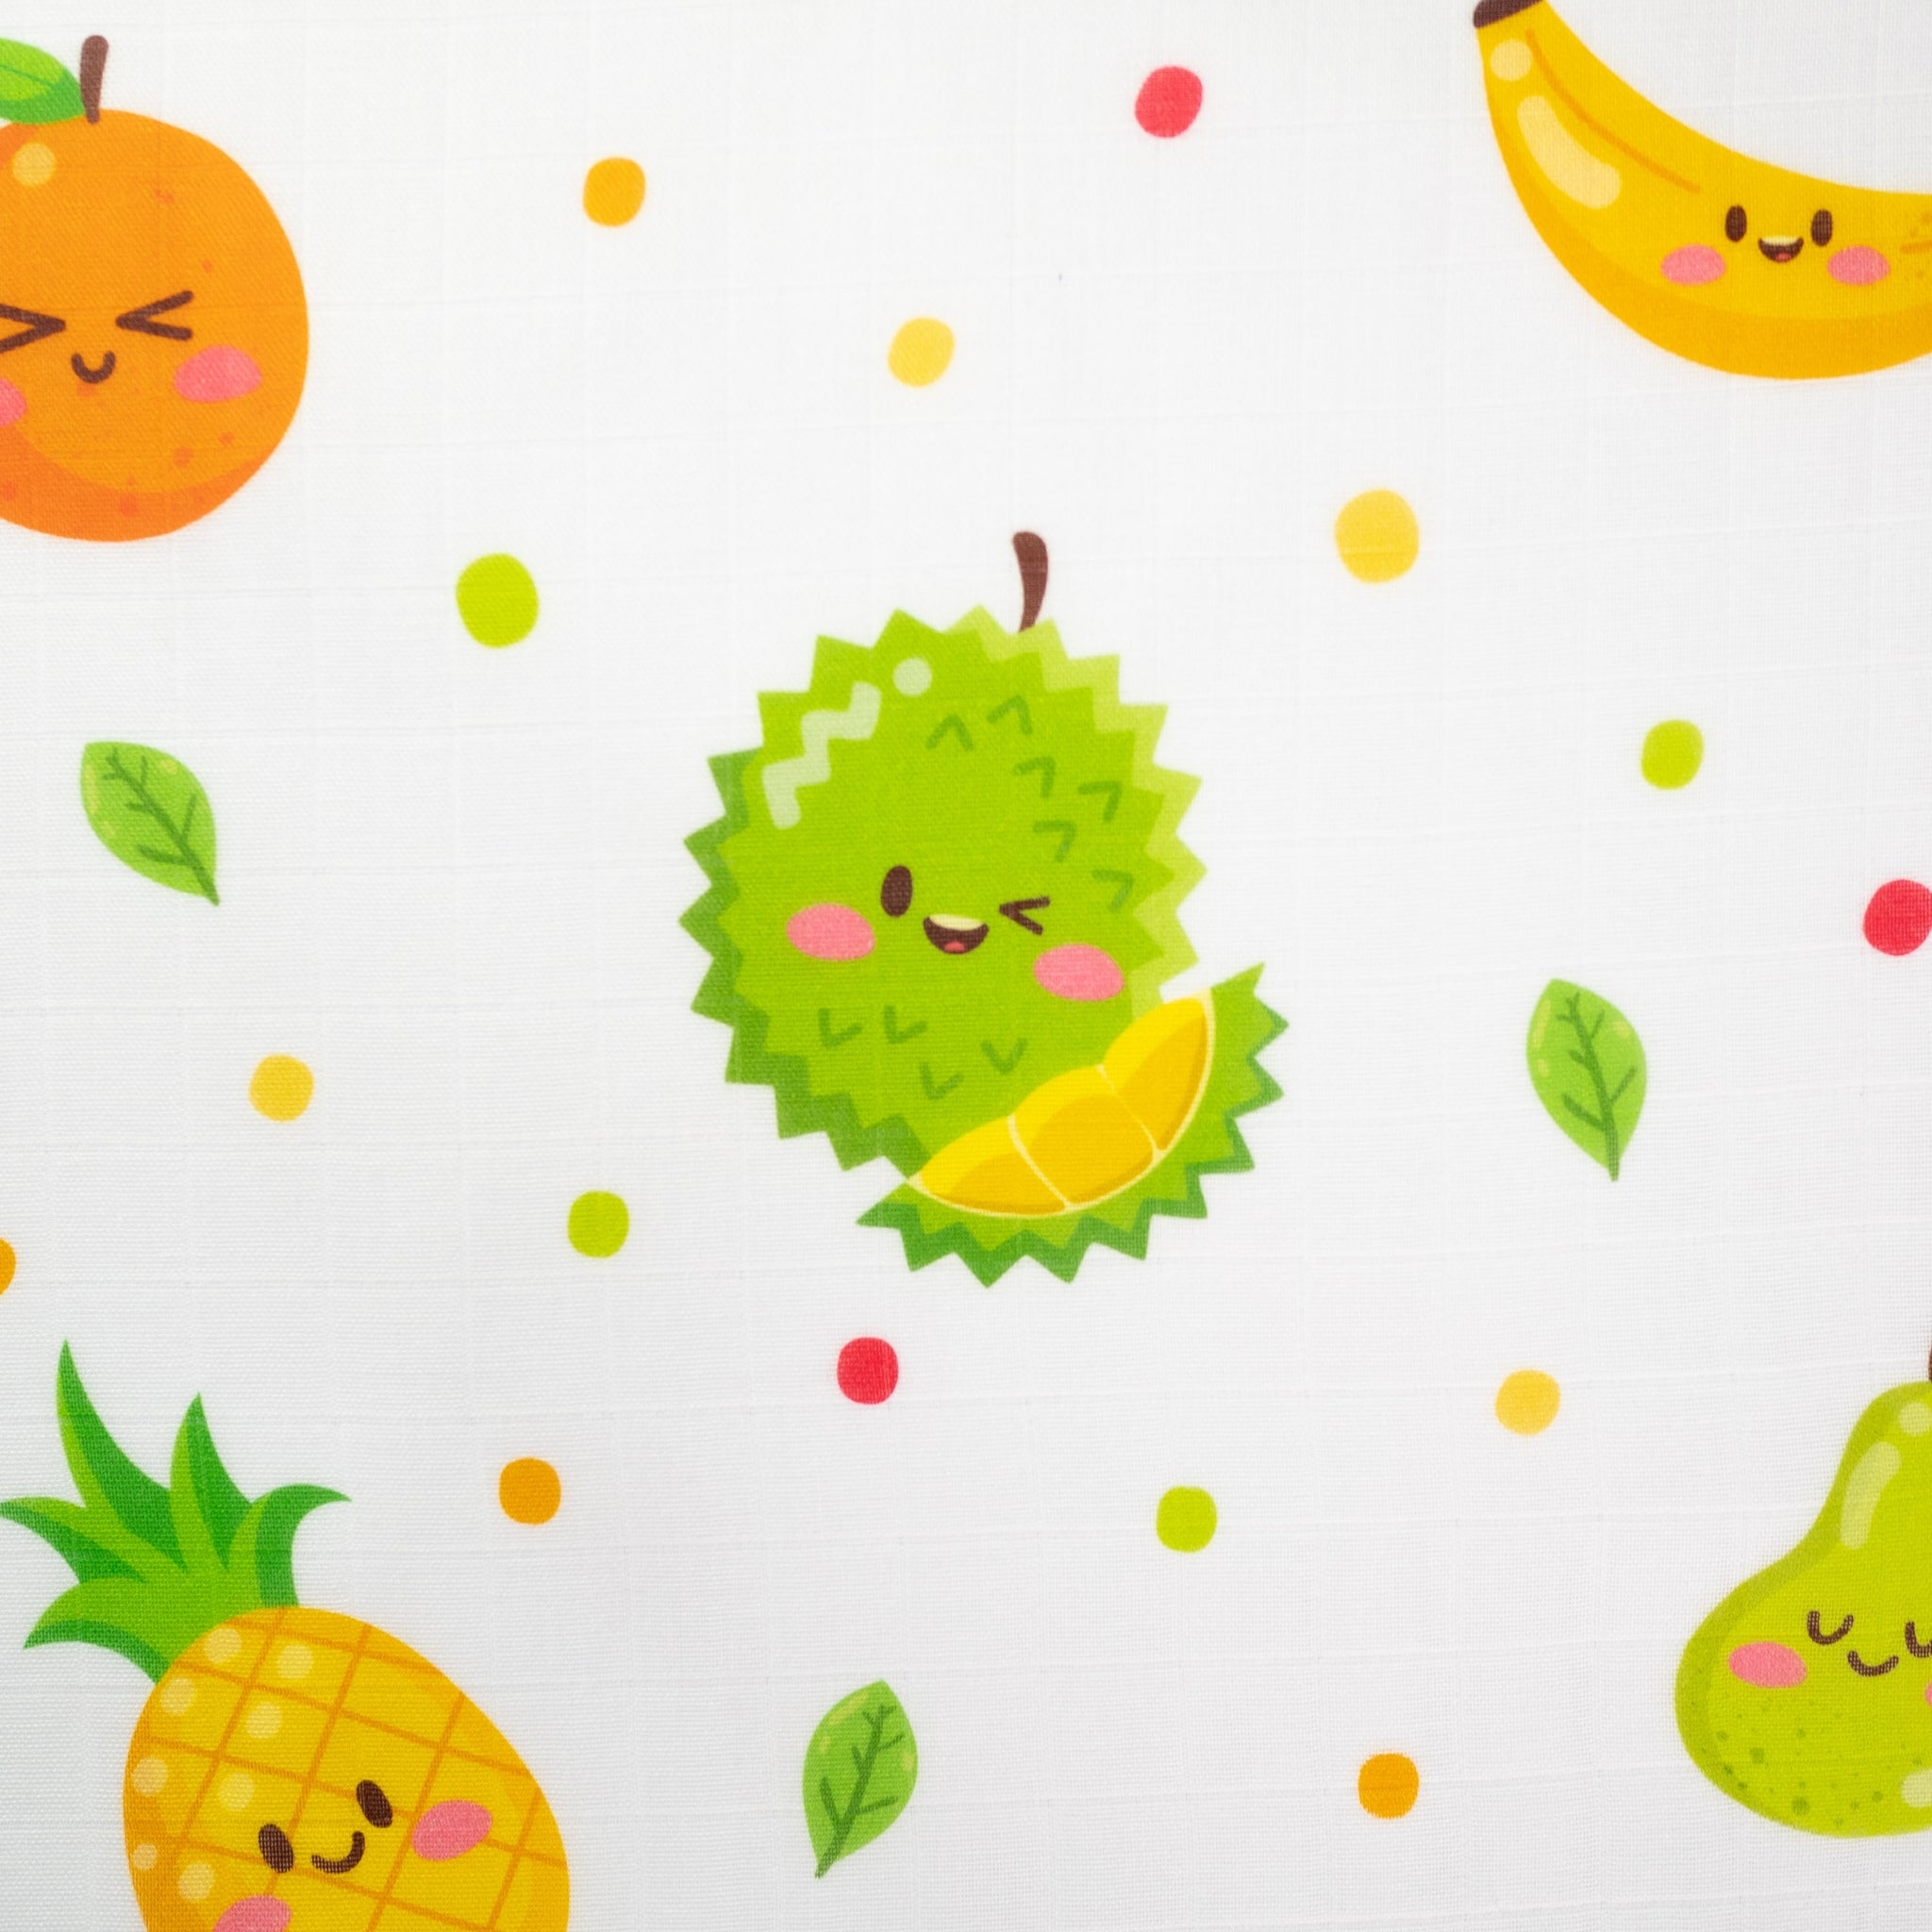 Swaddle / Baby Blanket - Fruity Fruits